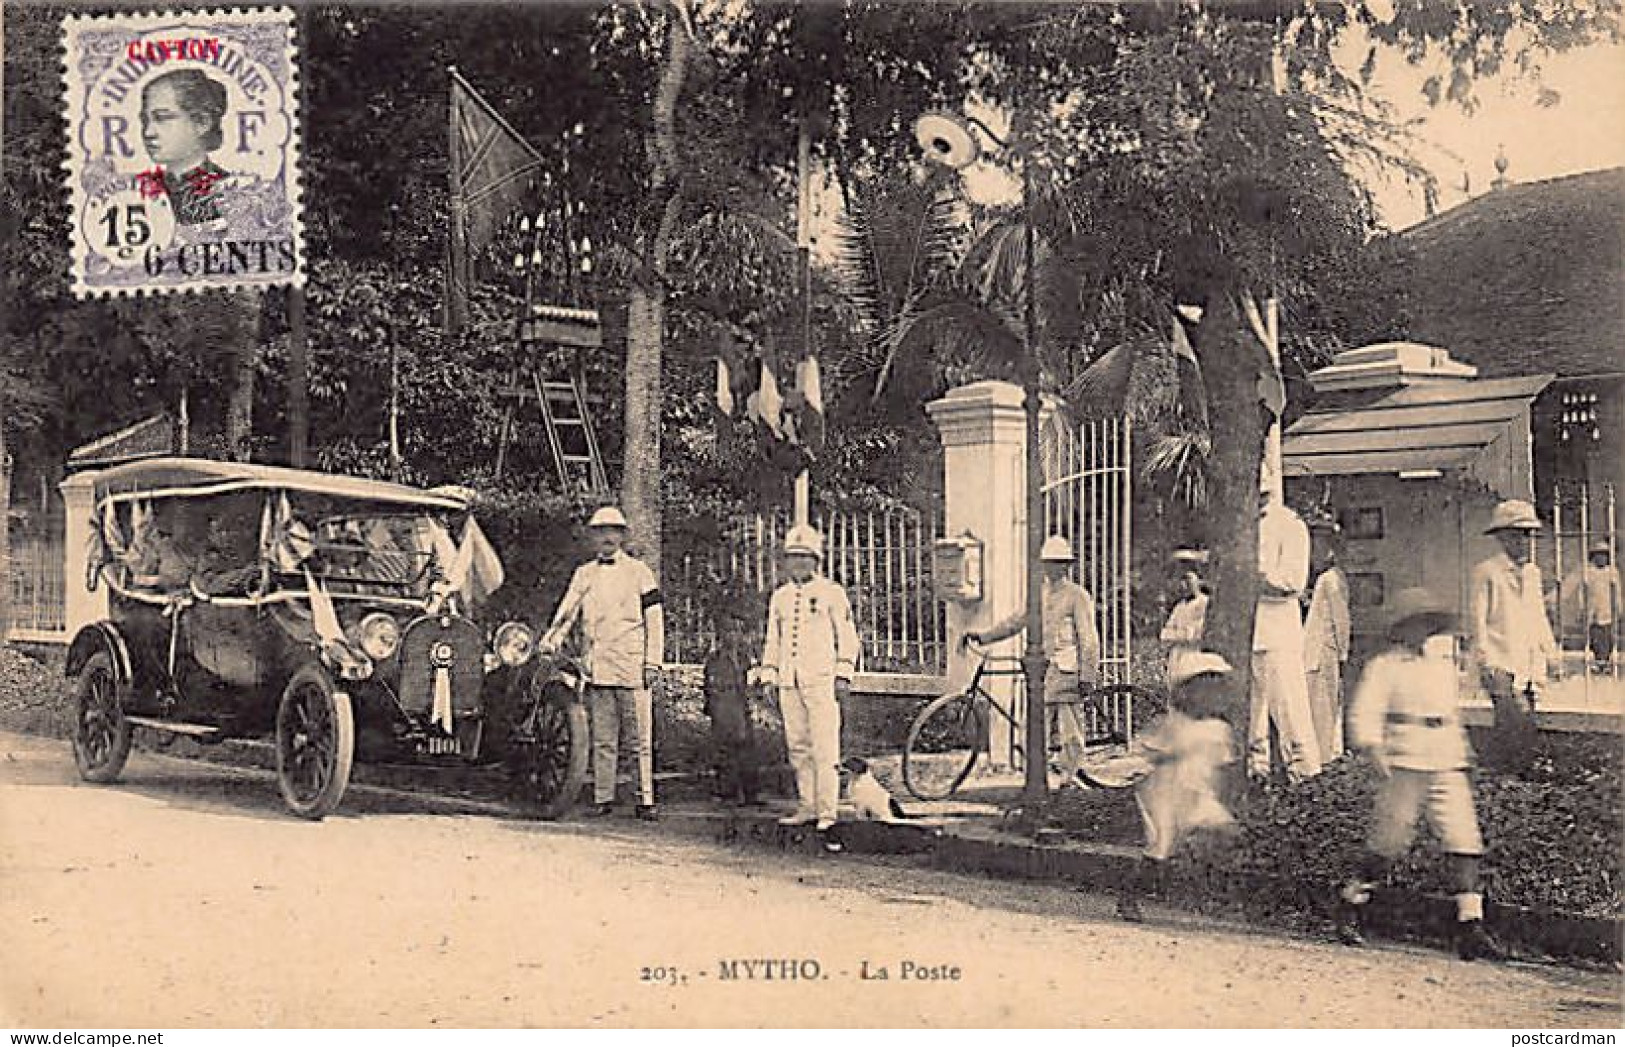 Viet-Nam - MYTHO - La Poste - Automobile Postale - Ed. Albert Portail 203 - Vietnam